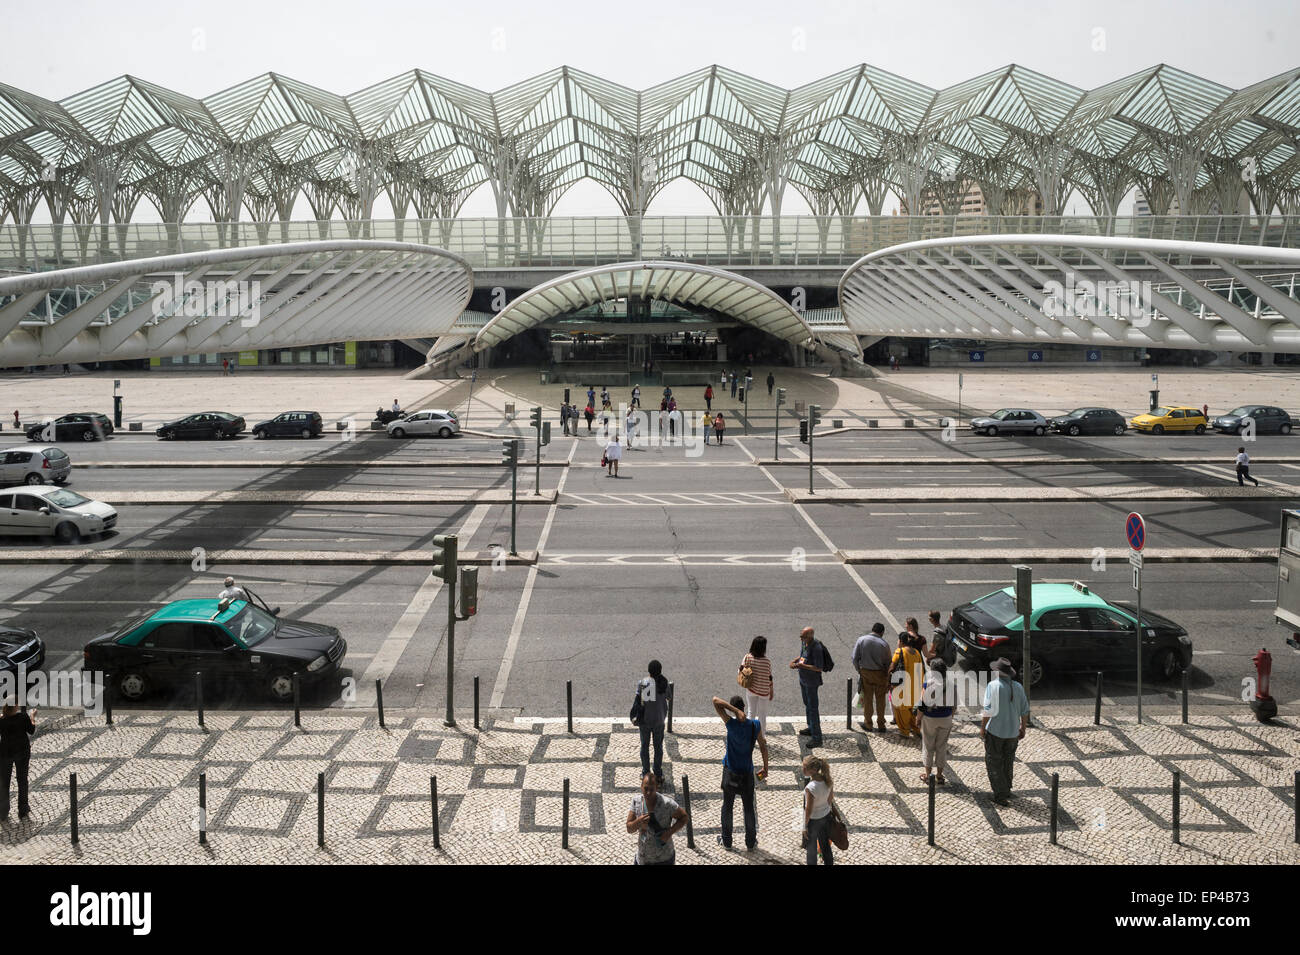 Gare do Oriente Metro Station at the Parque das Nacoes, Lisbon, Portugal. Stock Photo